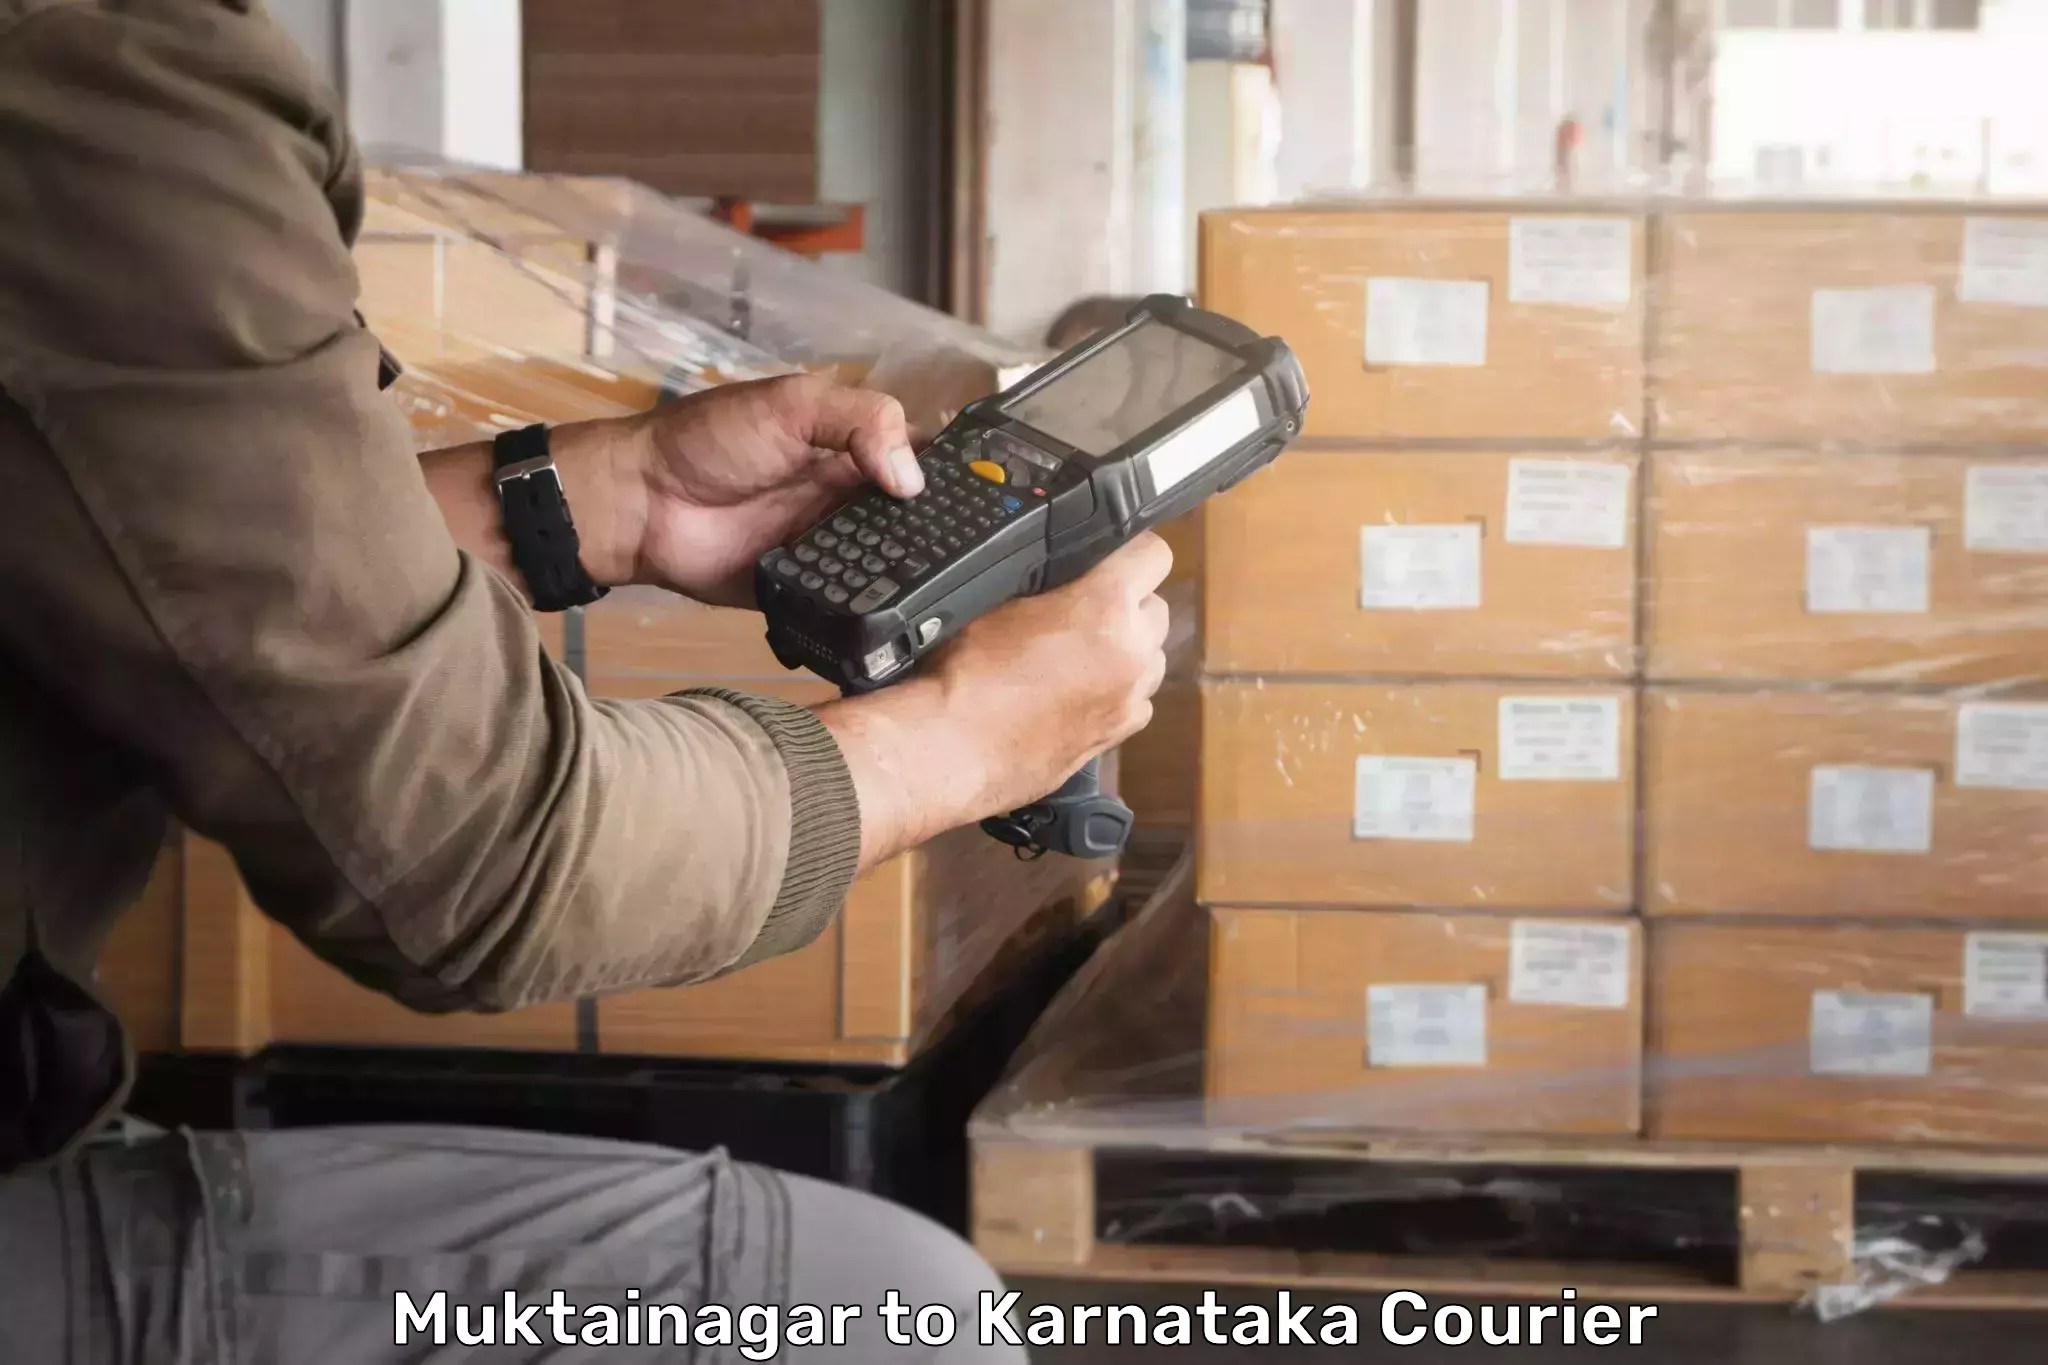 Reliable delivery network Muktainagar to Chitradurga